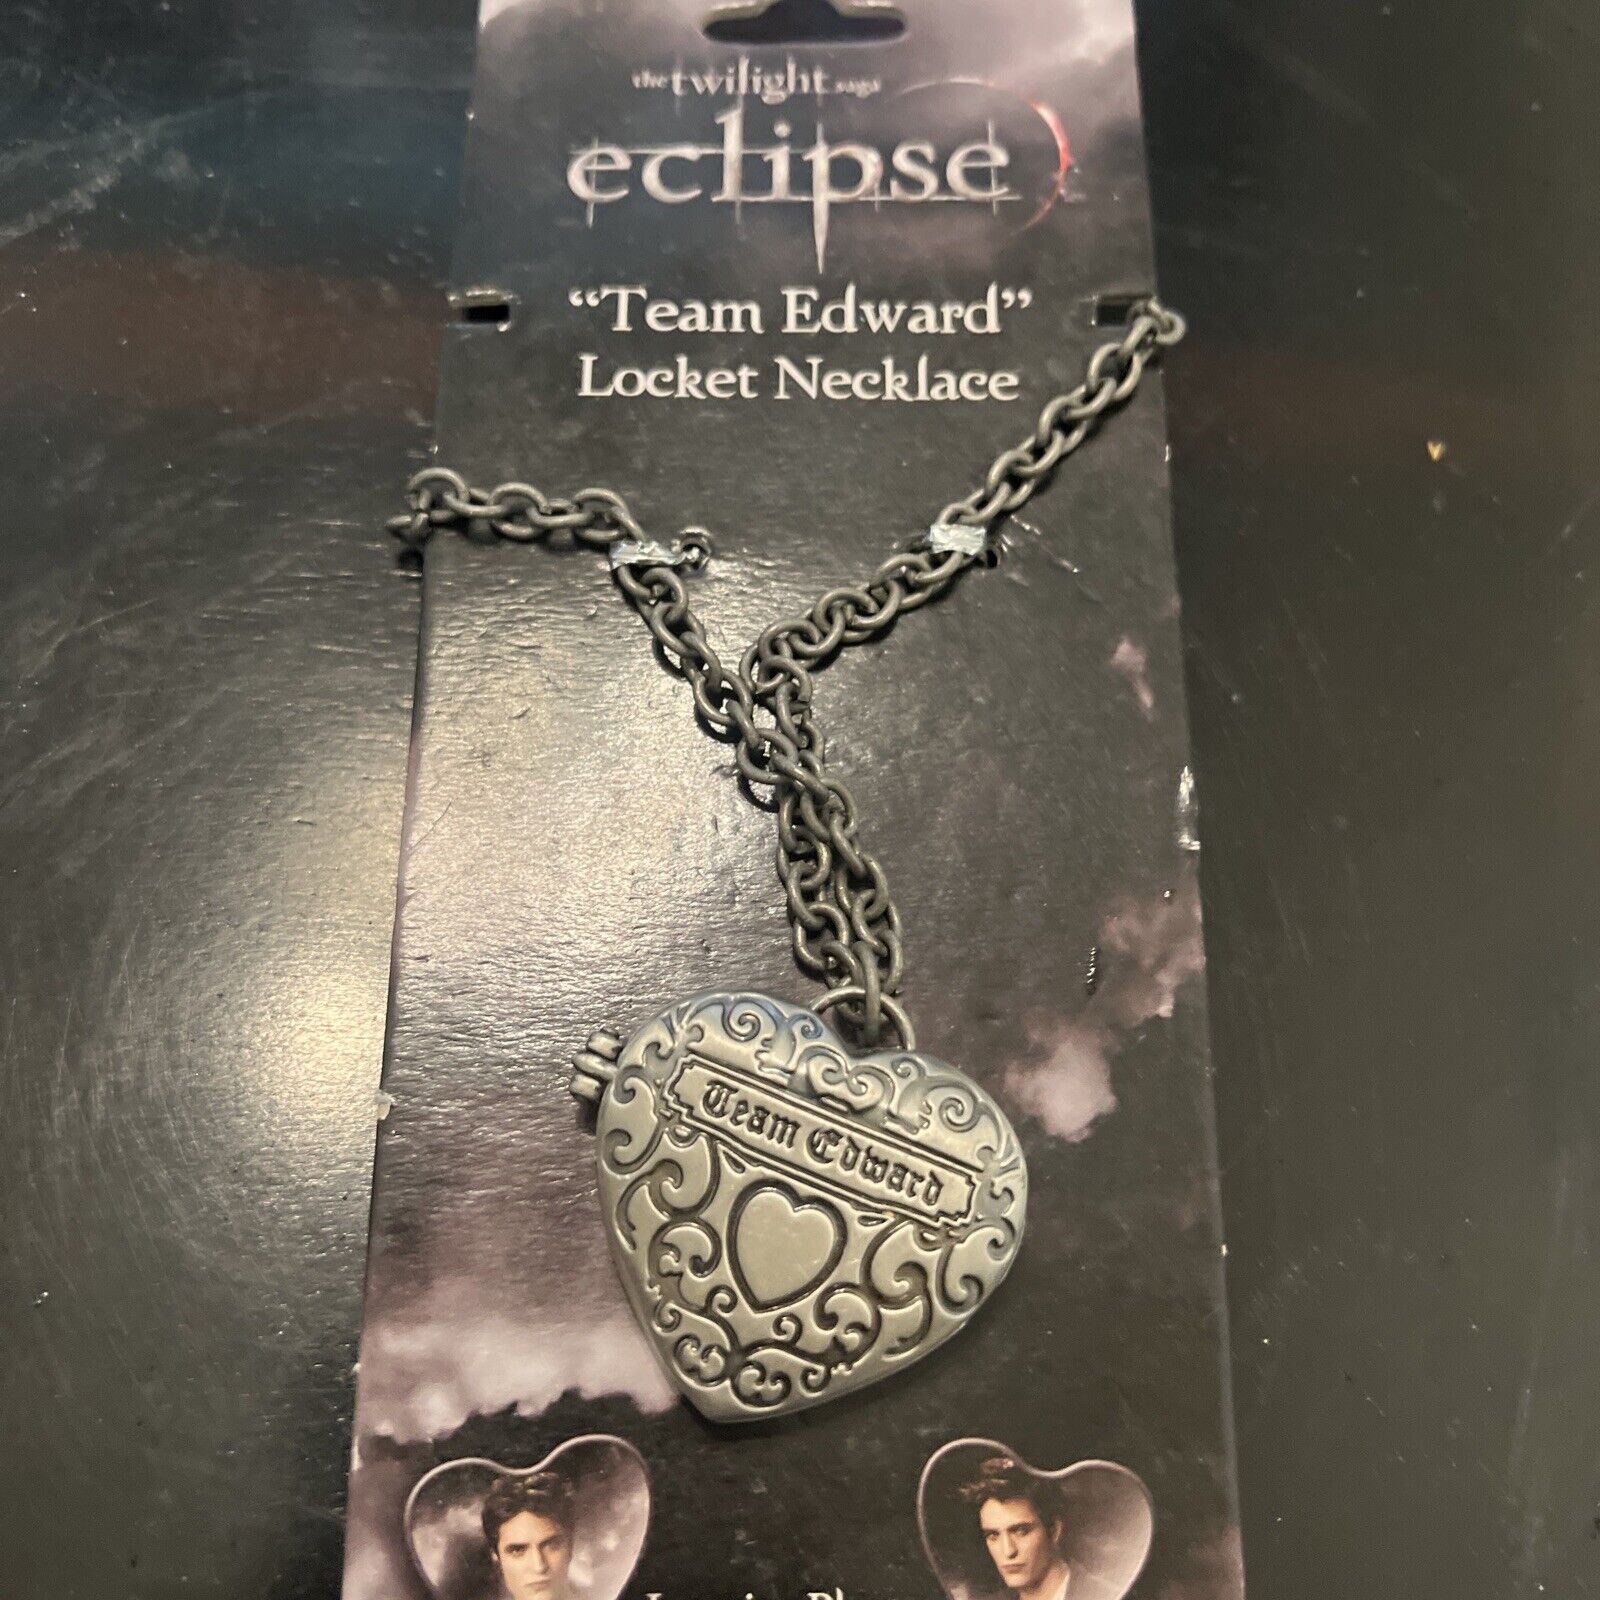 The Twilight Saga - Eclipse - “Team Edward” -  Locket Necklace RARE NECA